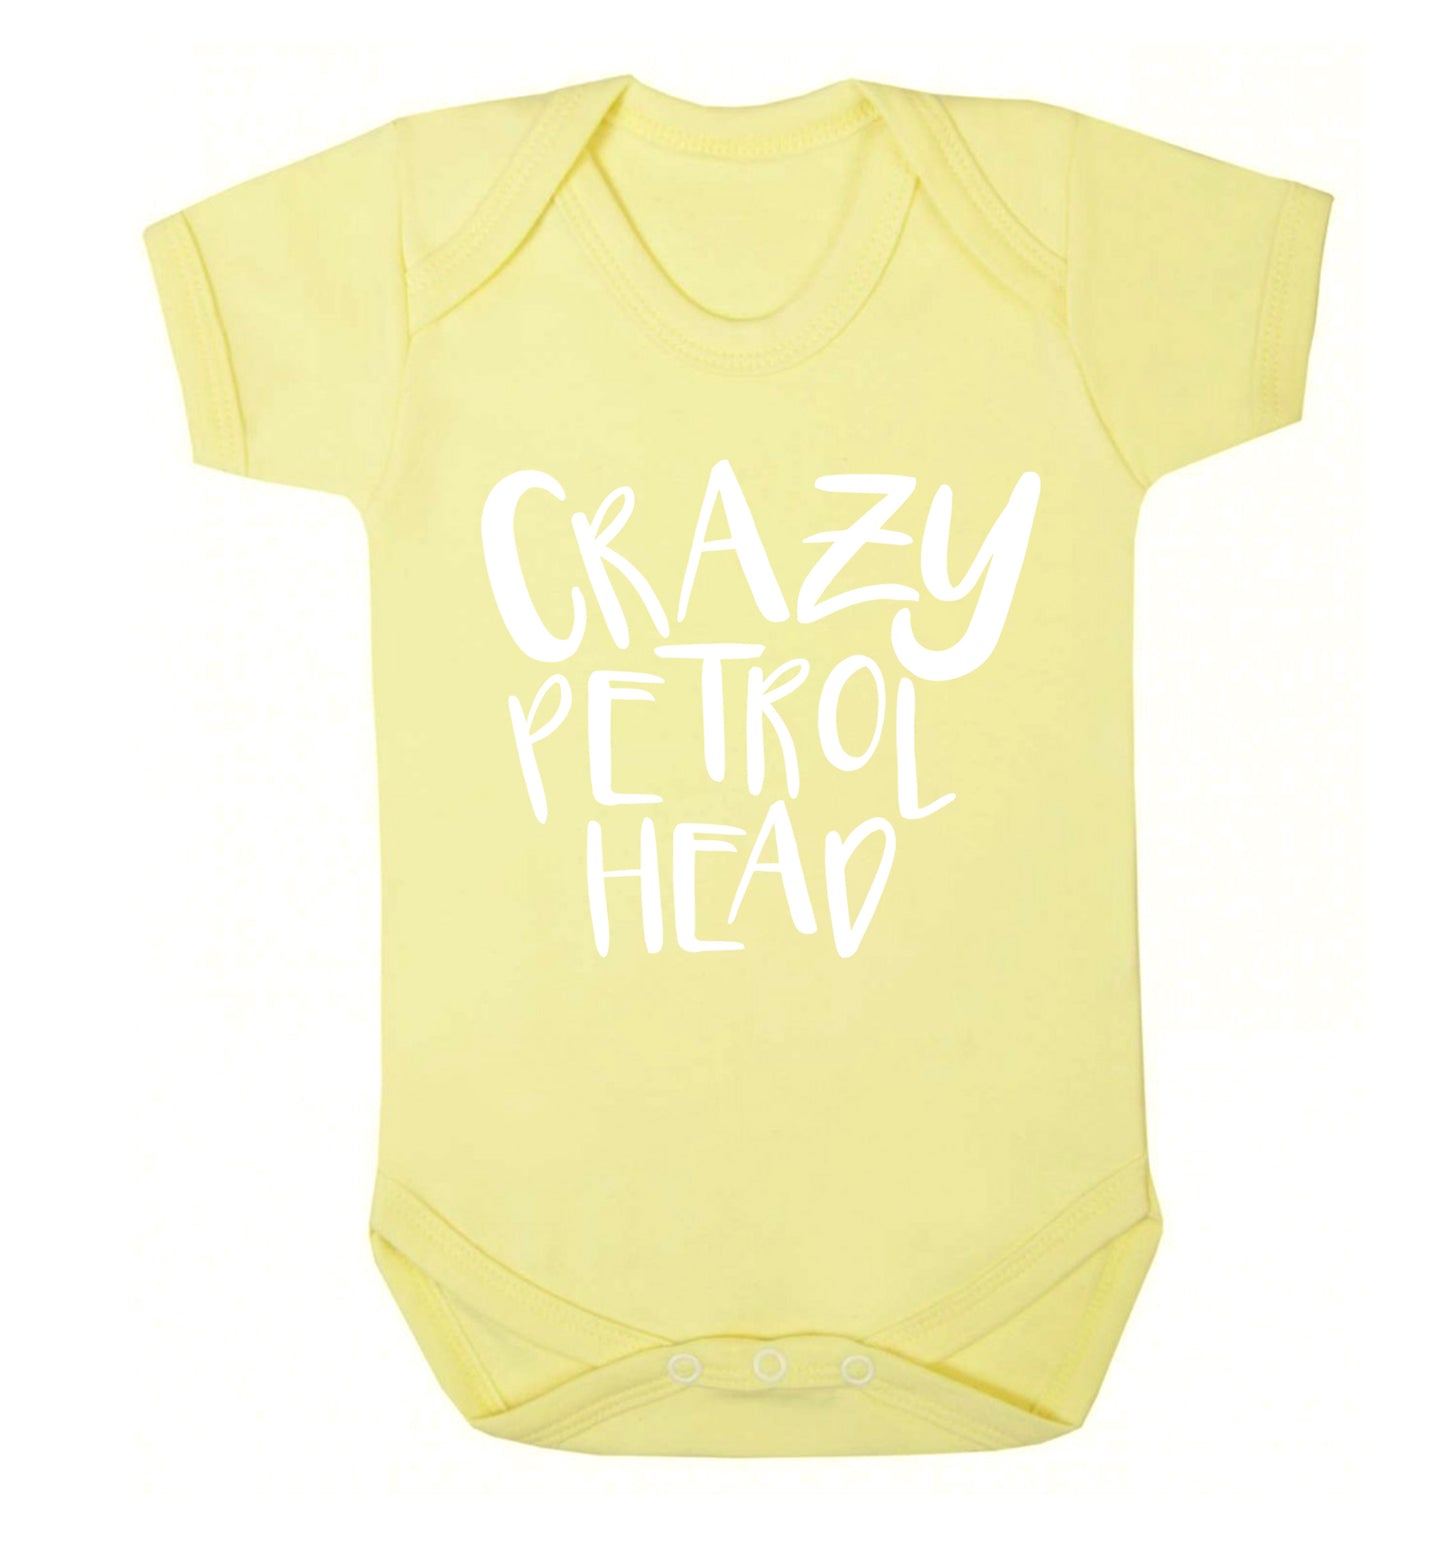 Crazy petrol head Baby Vest pale yellow 18-24 months